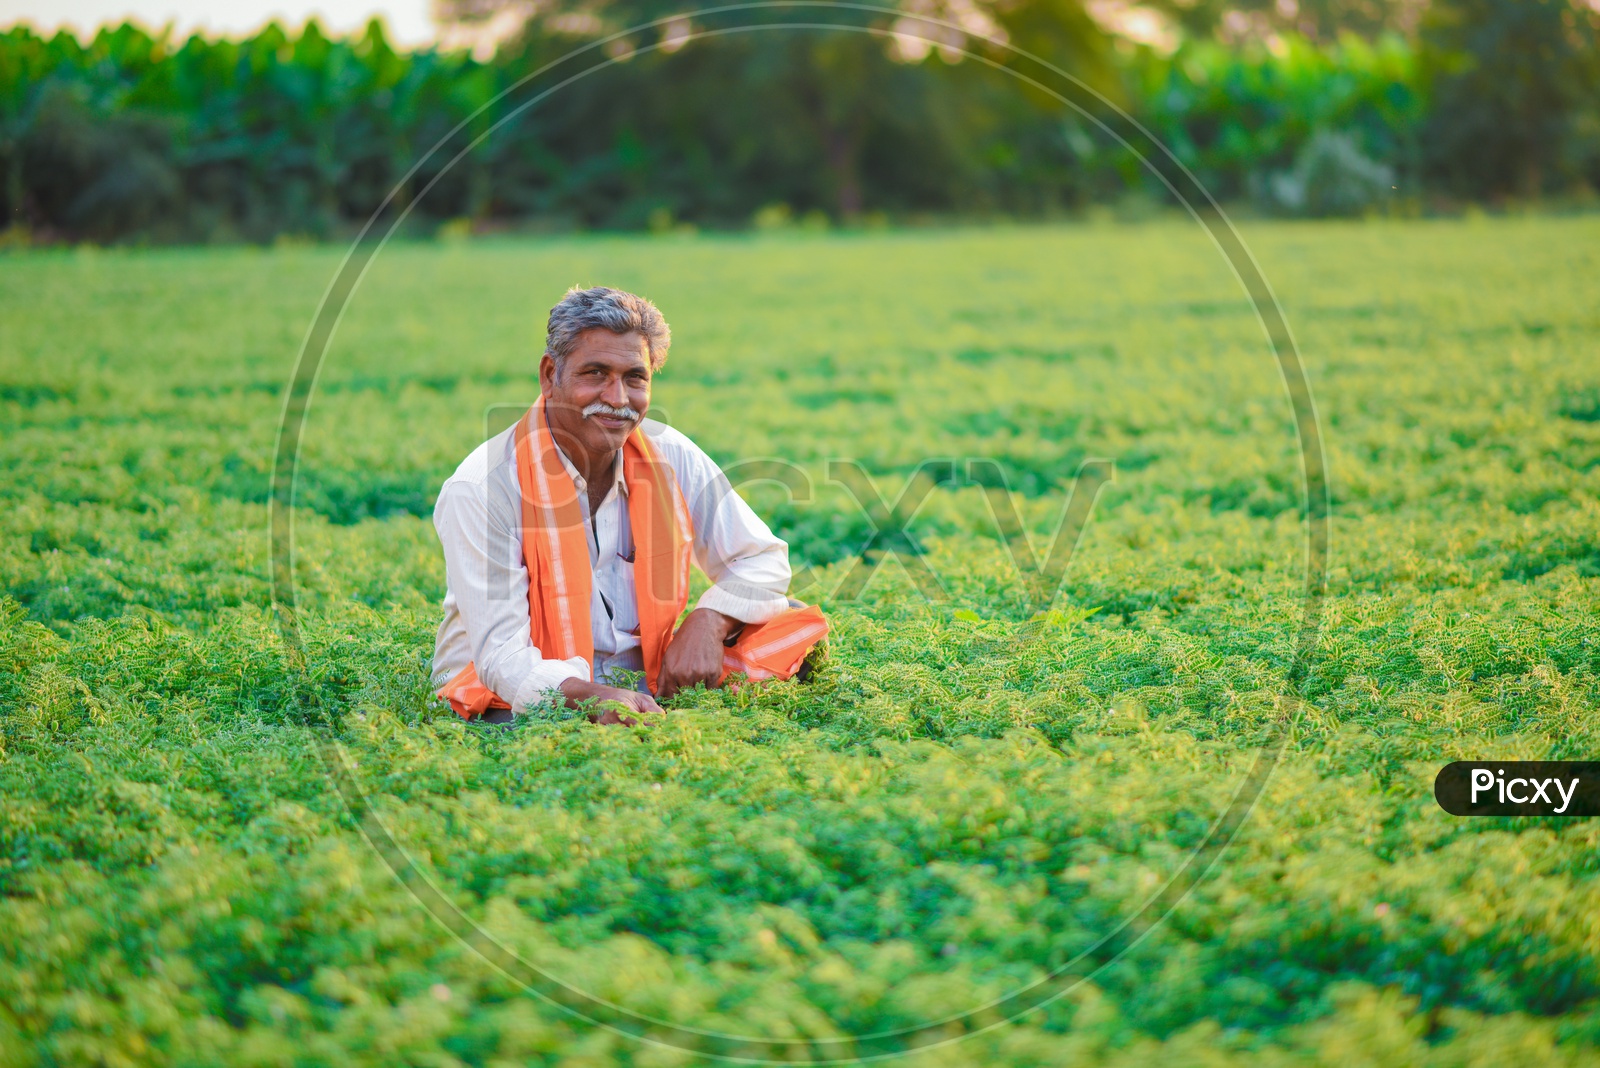 A Farmer in His Green Chickpea Field